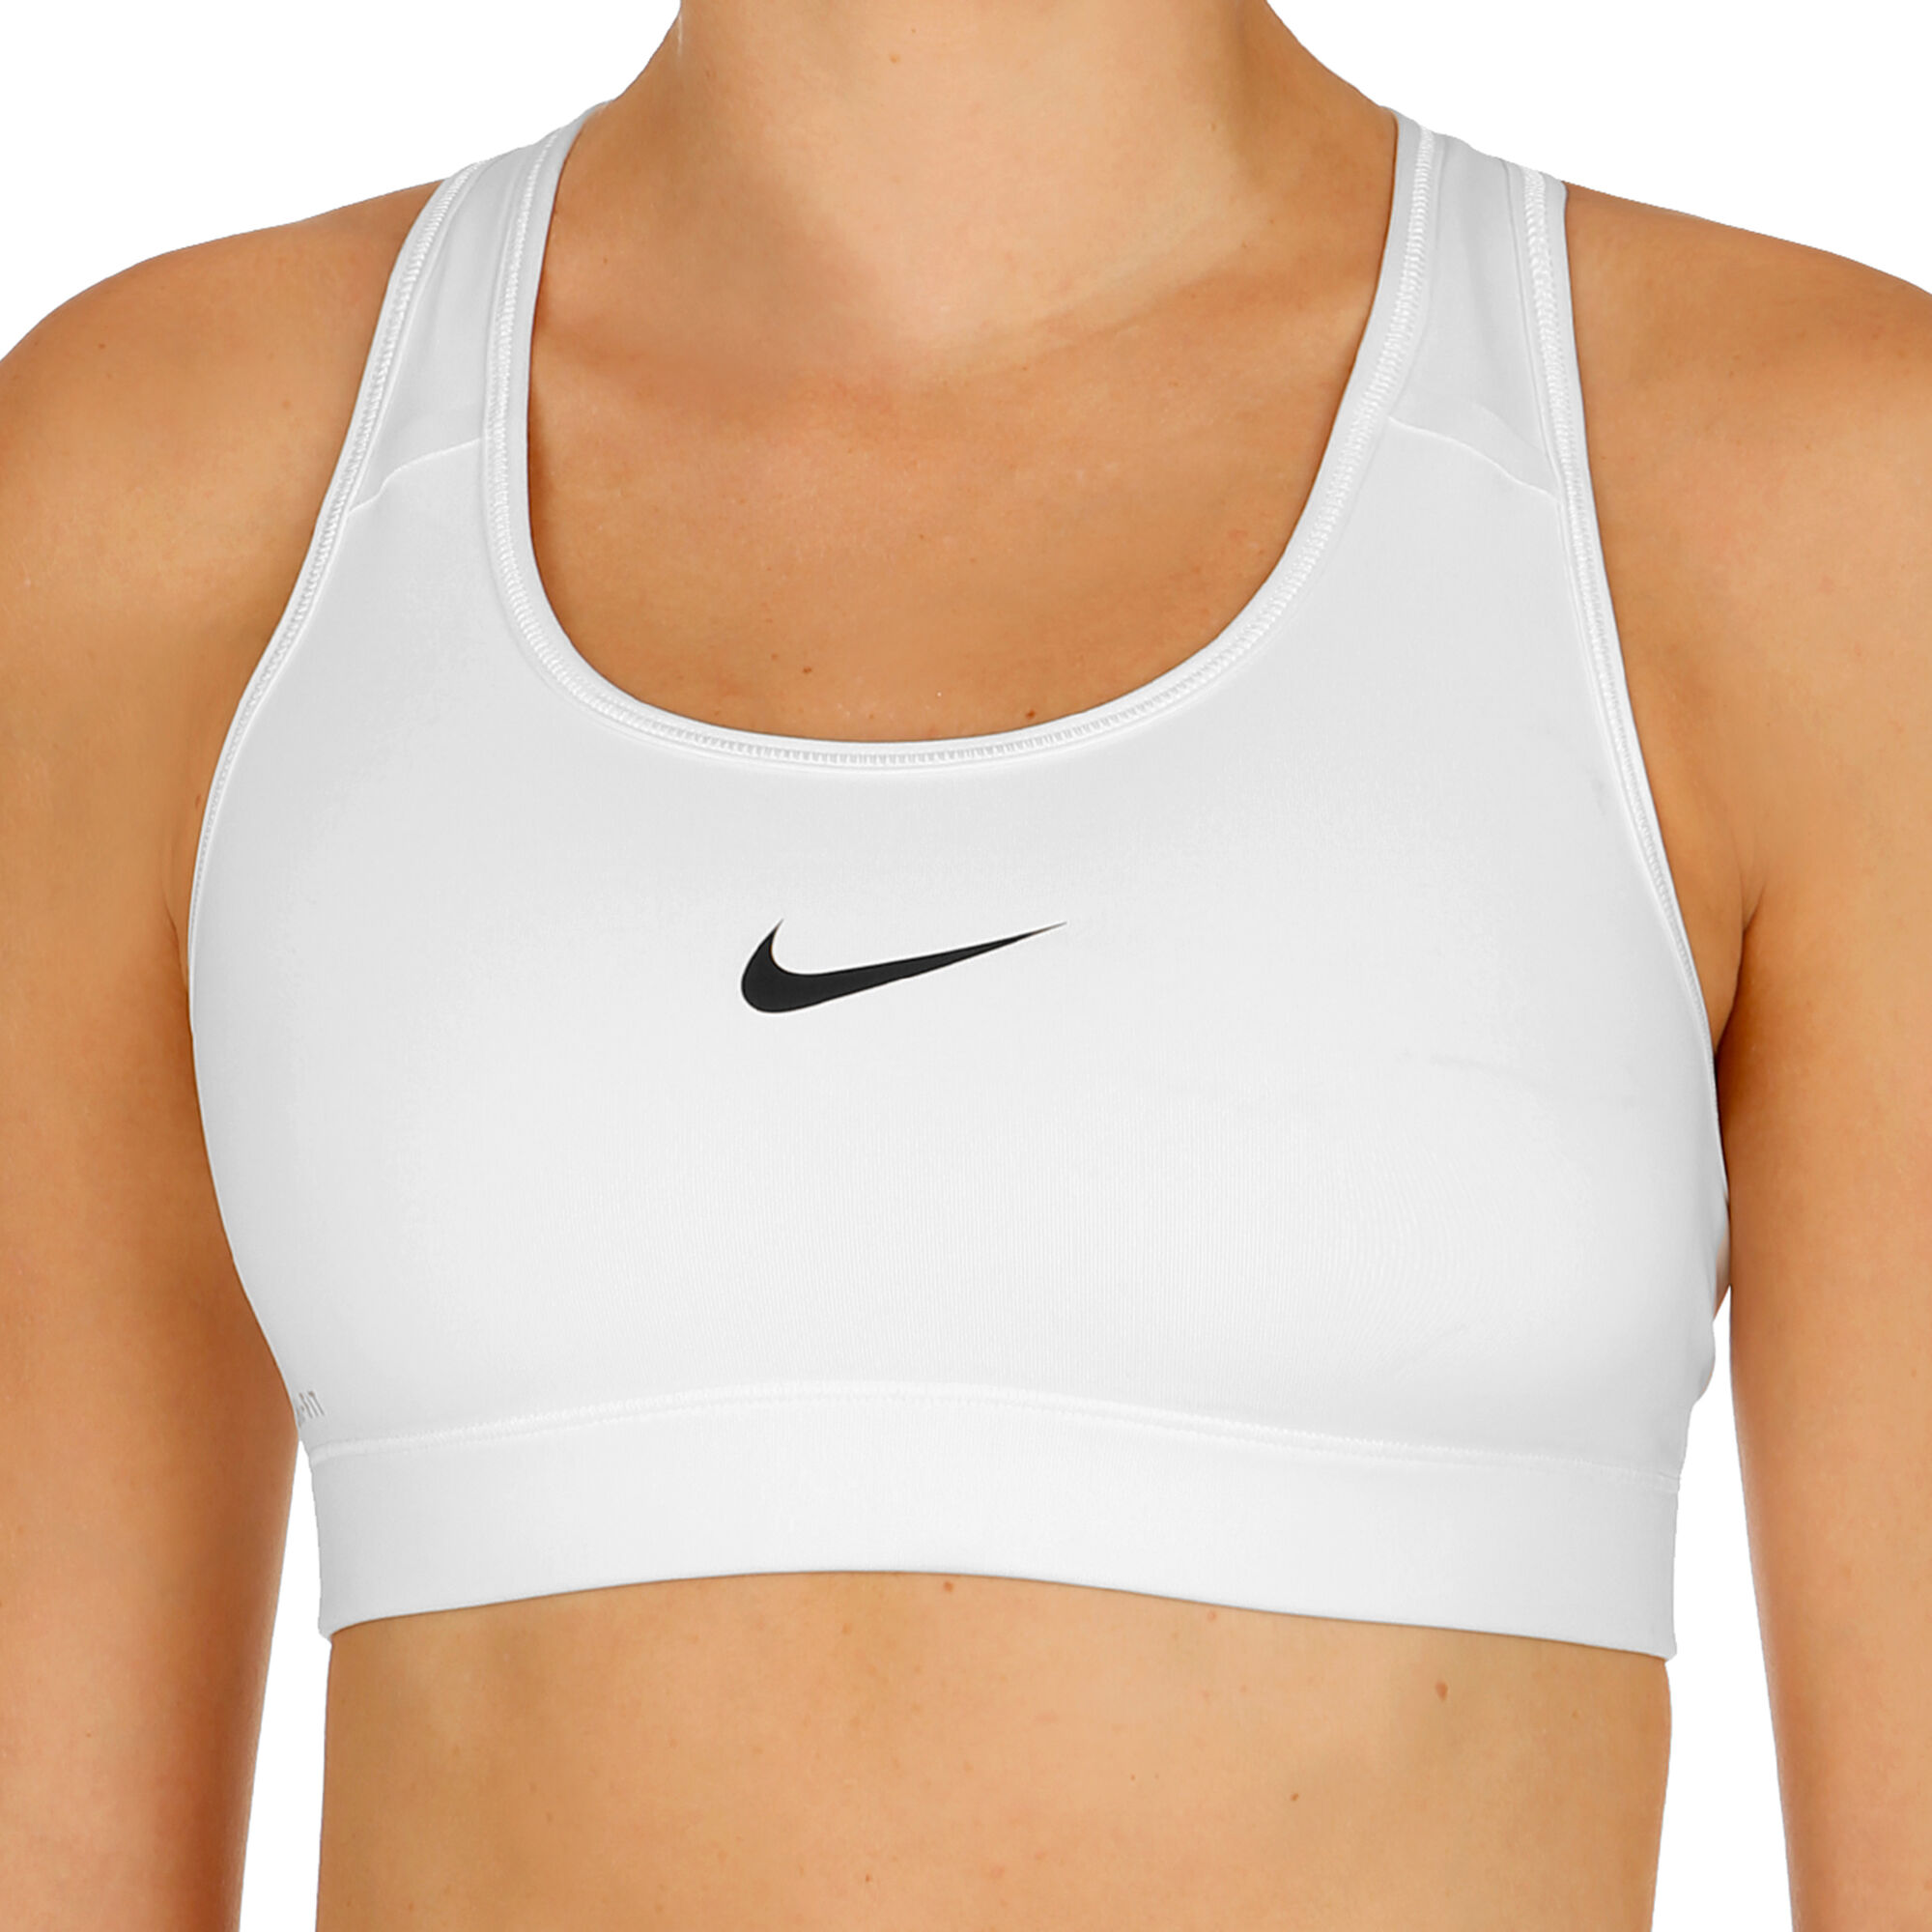 Nike Womens Pro Victory Compression Sports Bra Black/Black/(White) XL